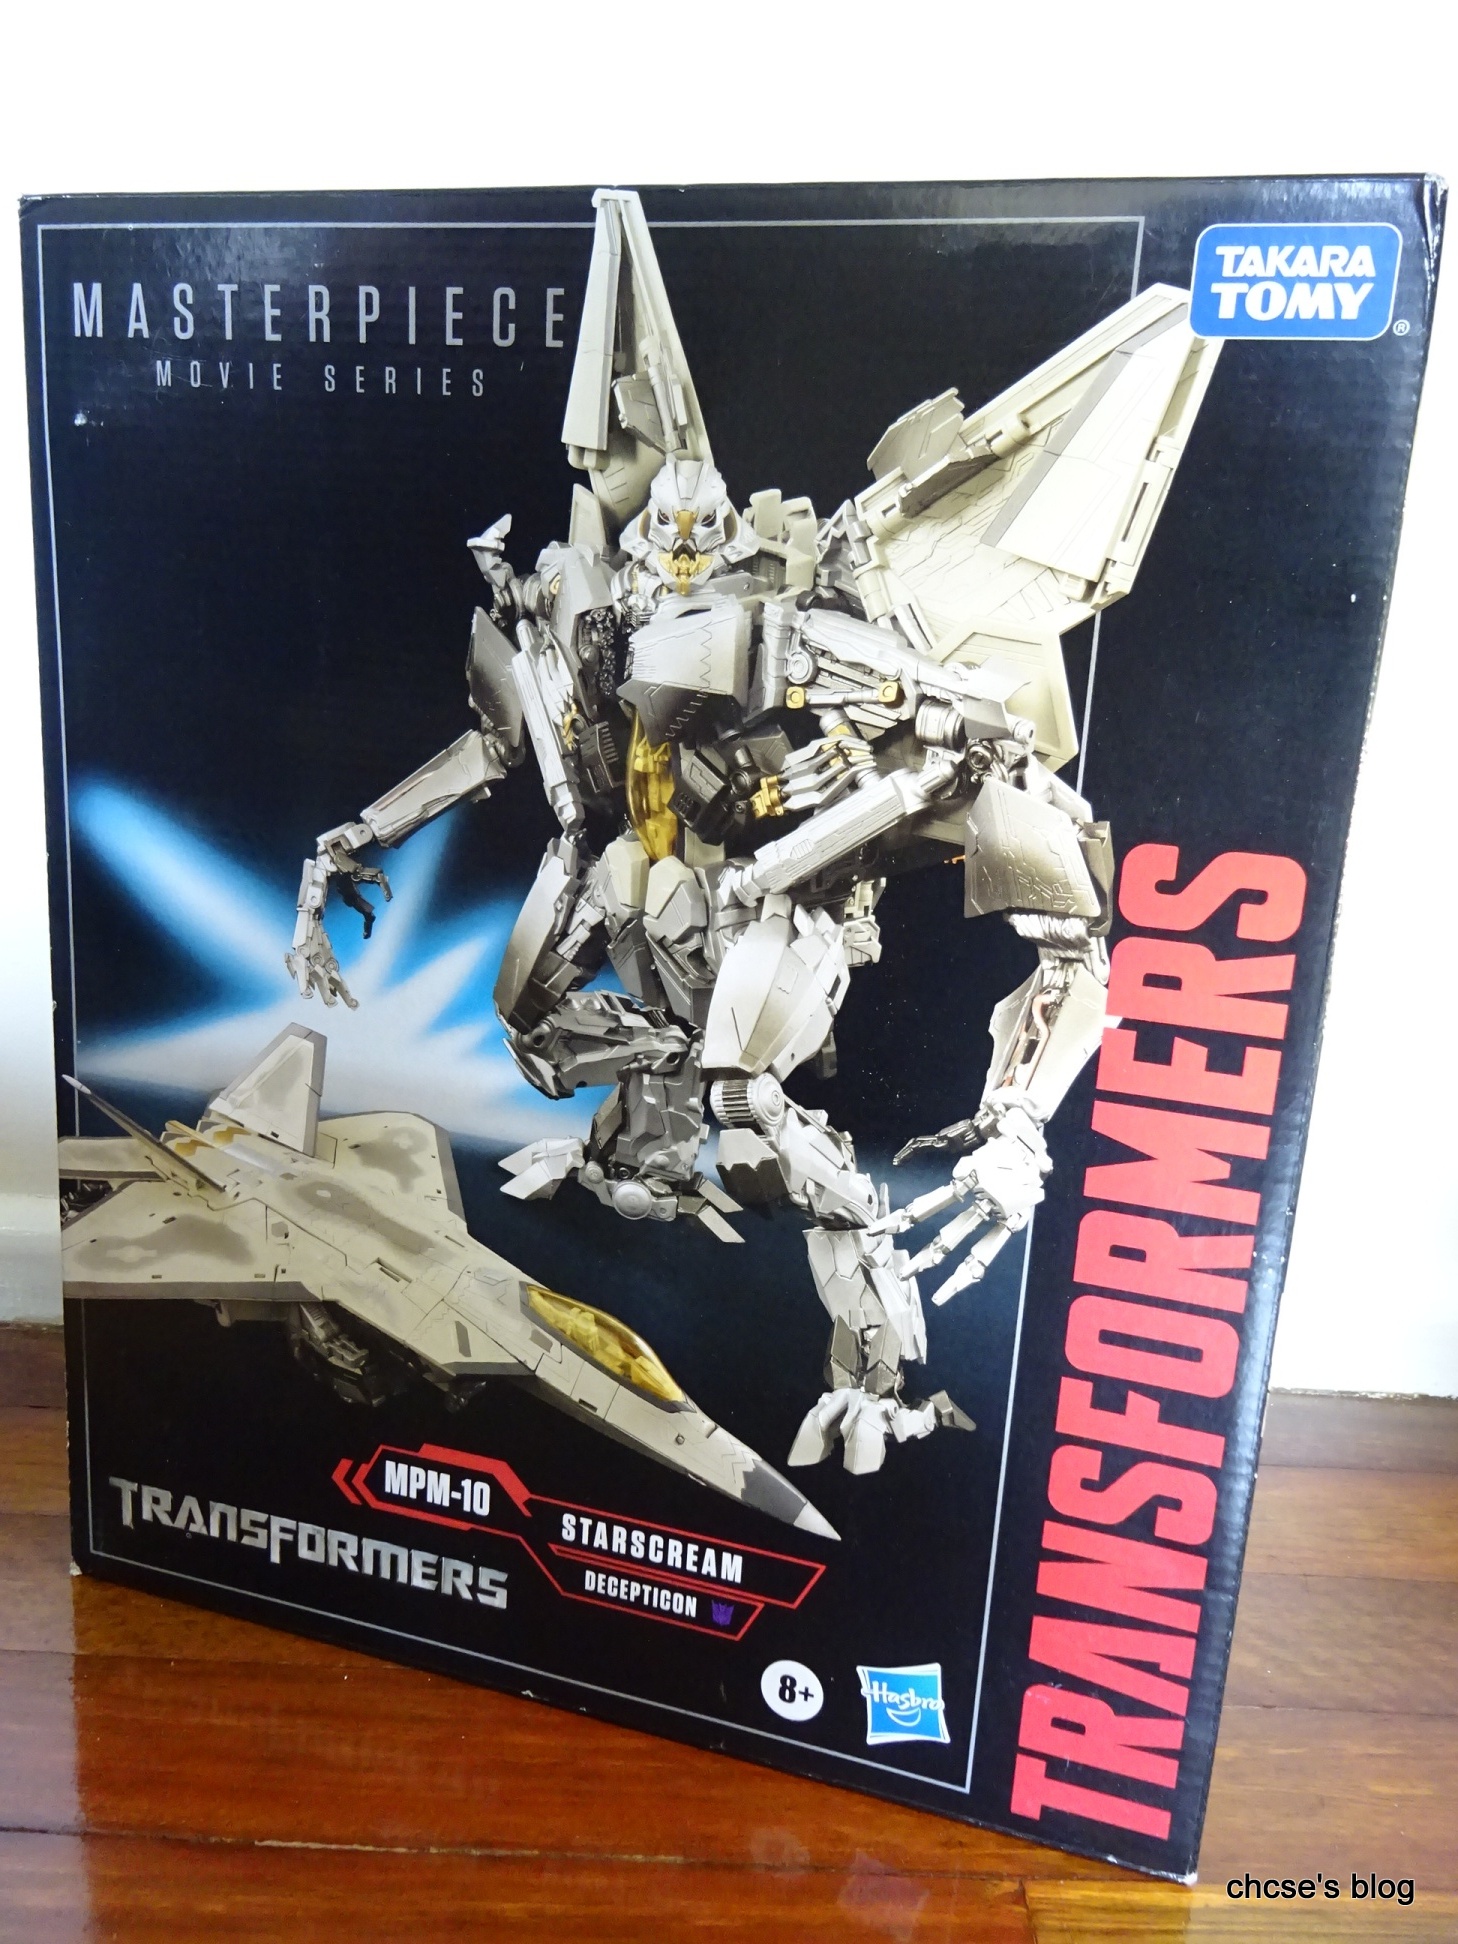 ChCse's blog: Toy Review: Transformers Masterpiece MPM-10 Starscream